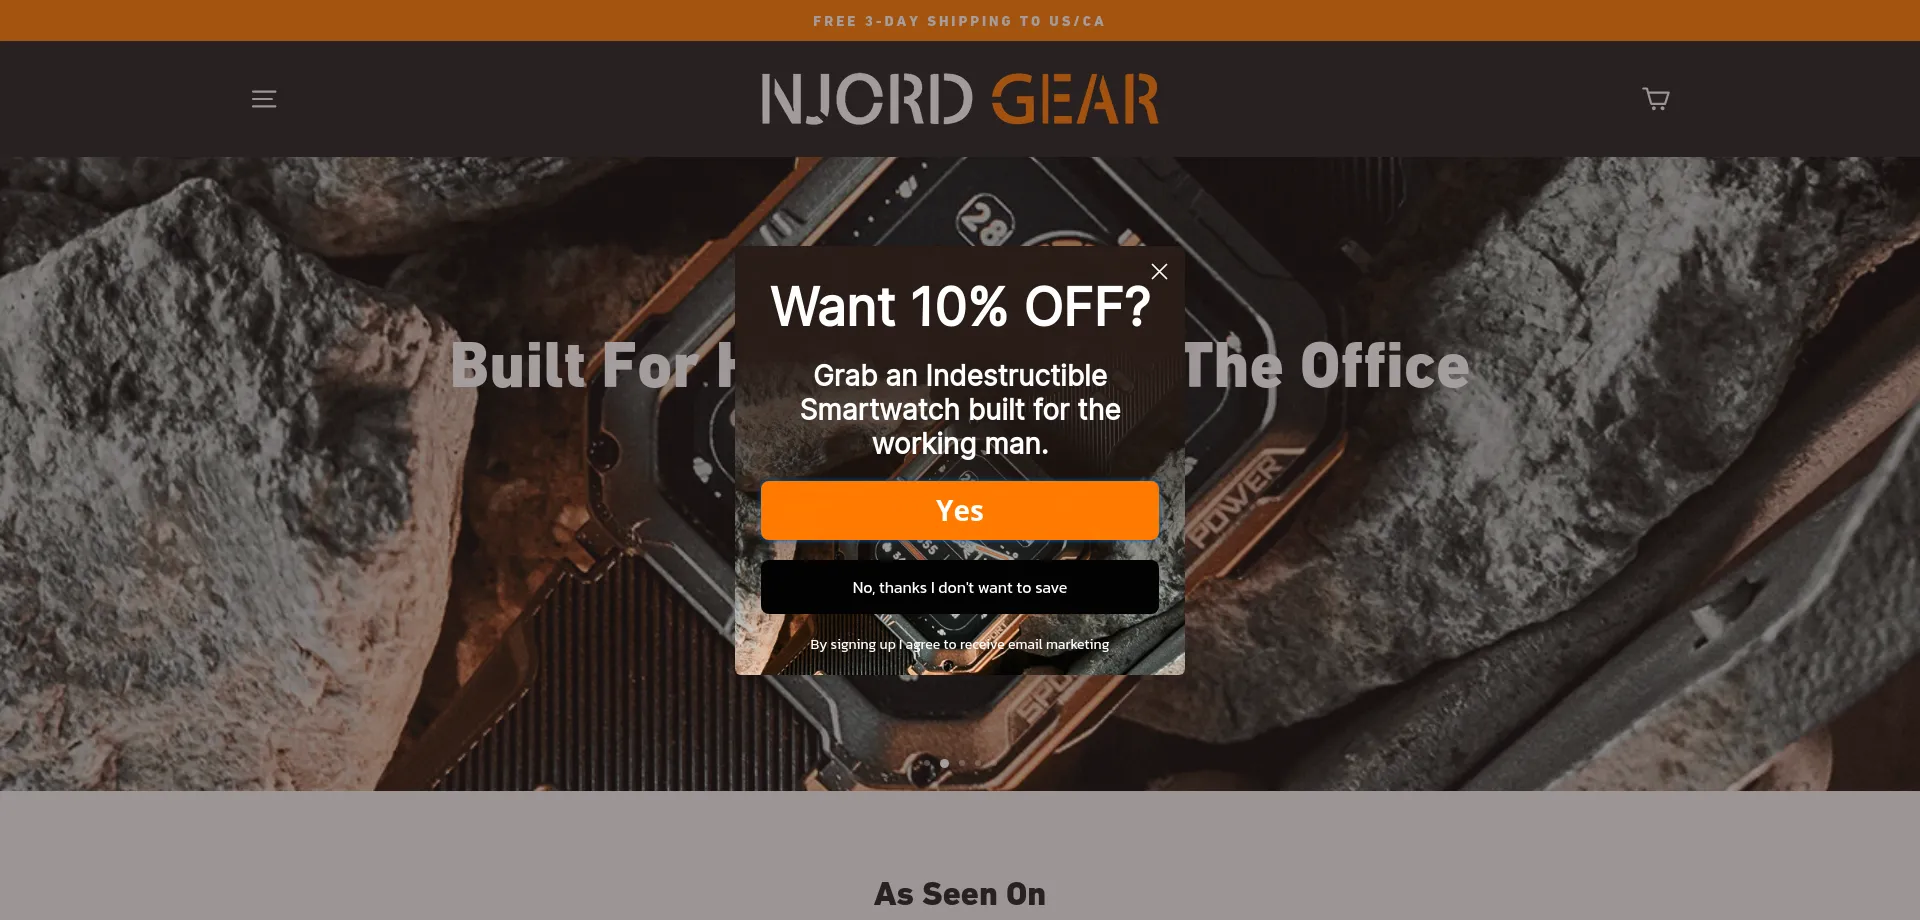 Njord-gear.com